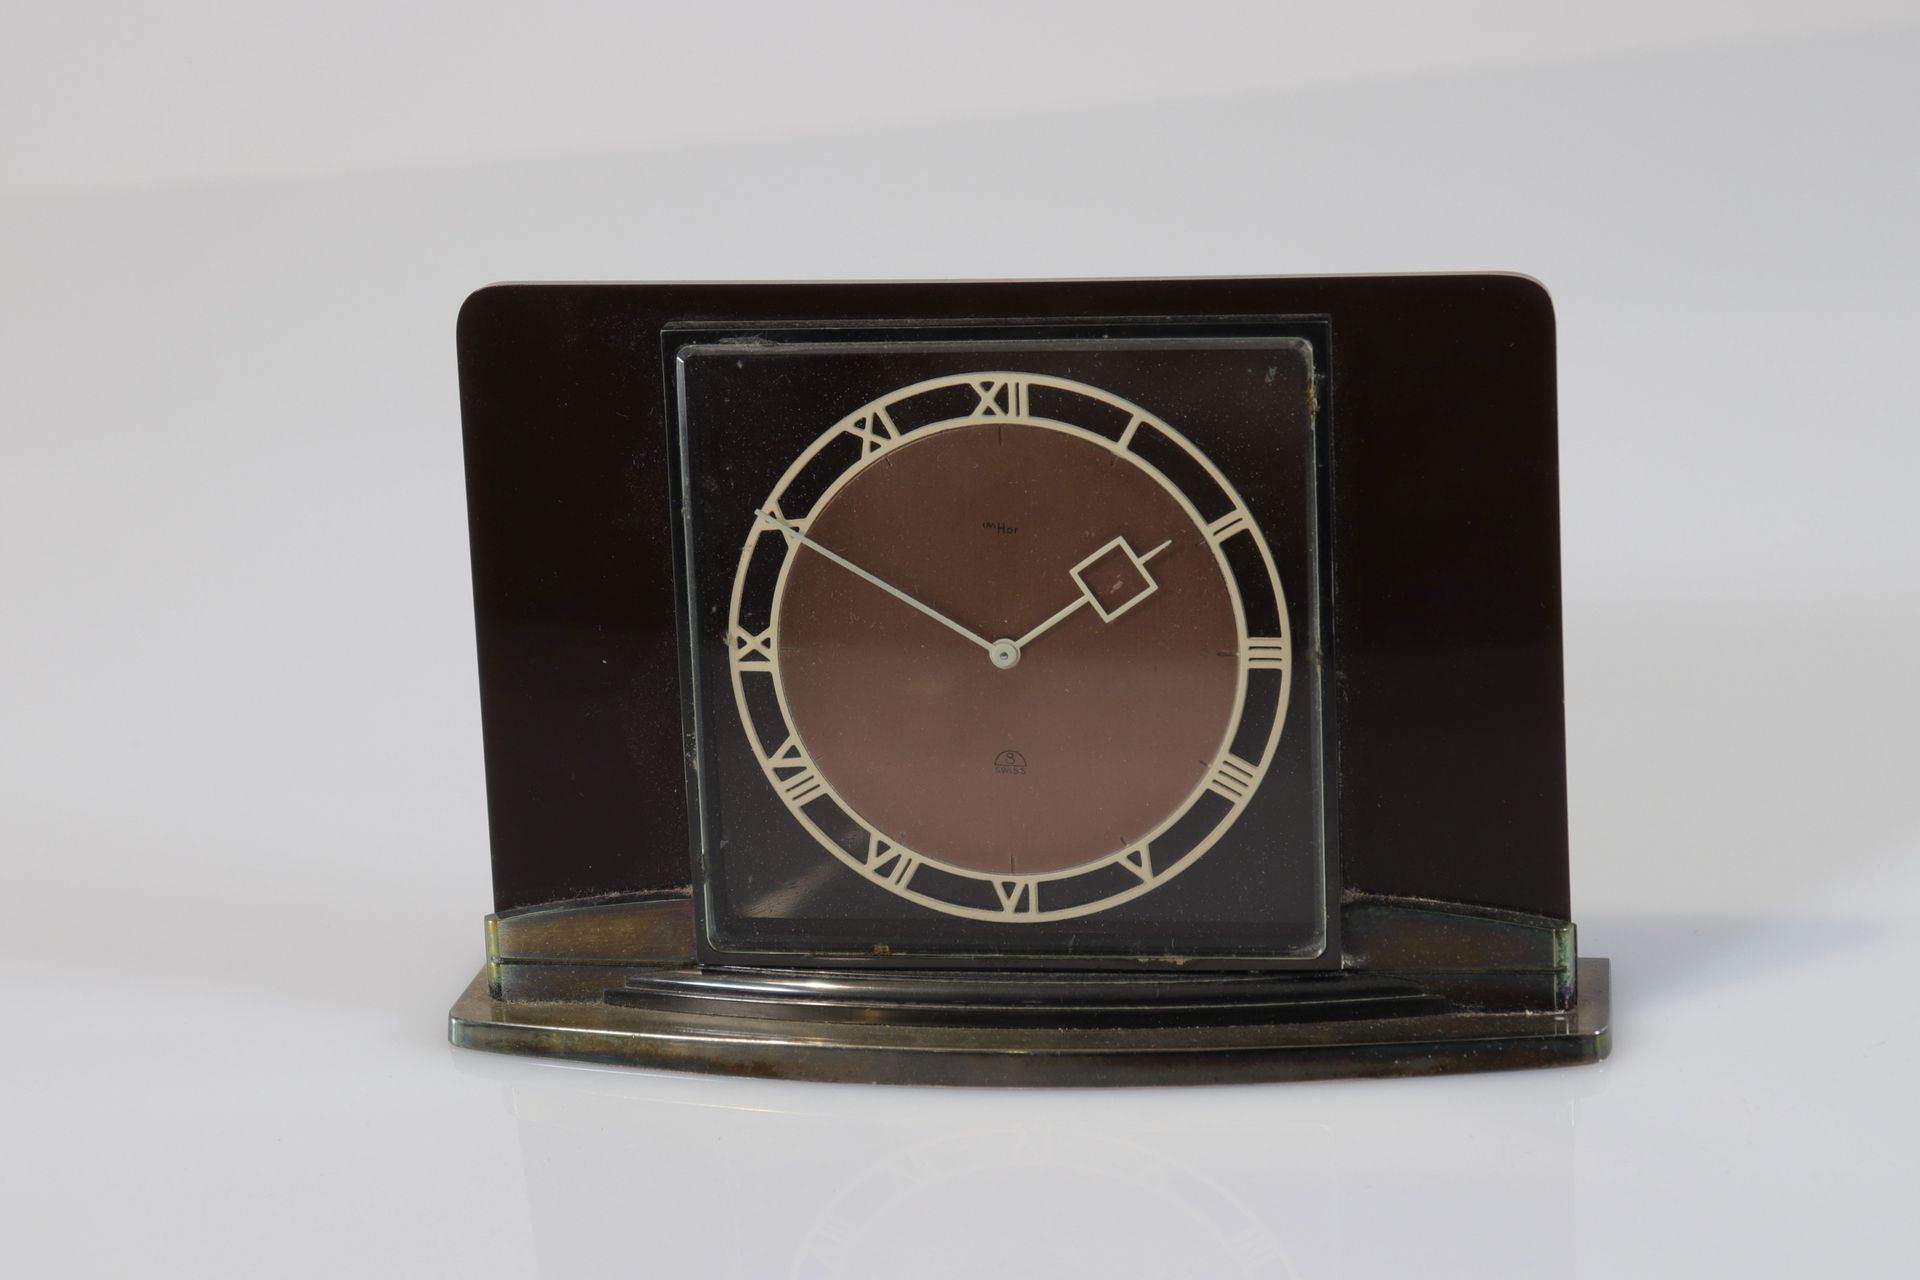 Suisse - Horloge Imhoff - 1930 Suiza - Reloj Imhoff - 1930
Periodo: 20º 
Dimensi&hellip;